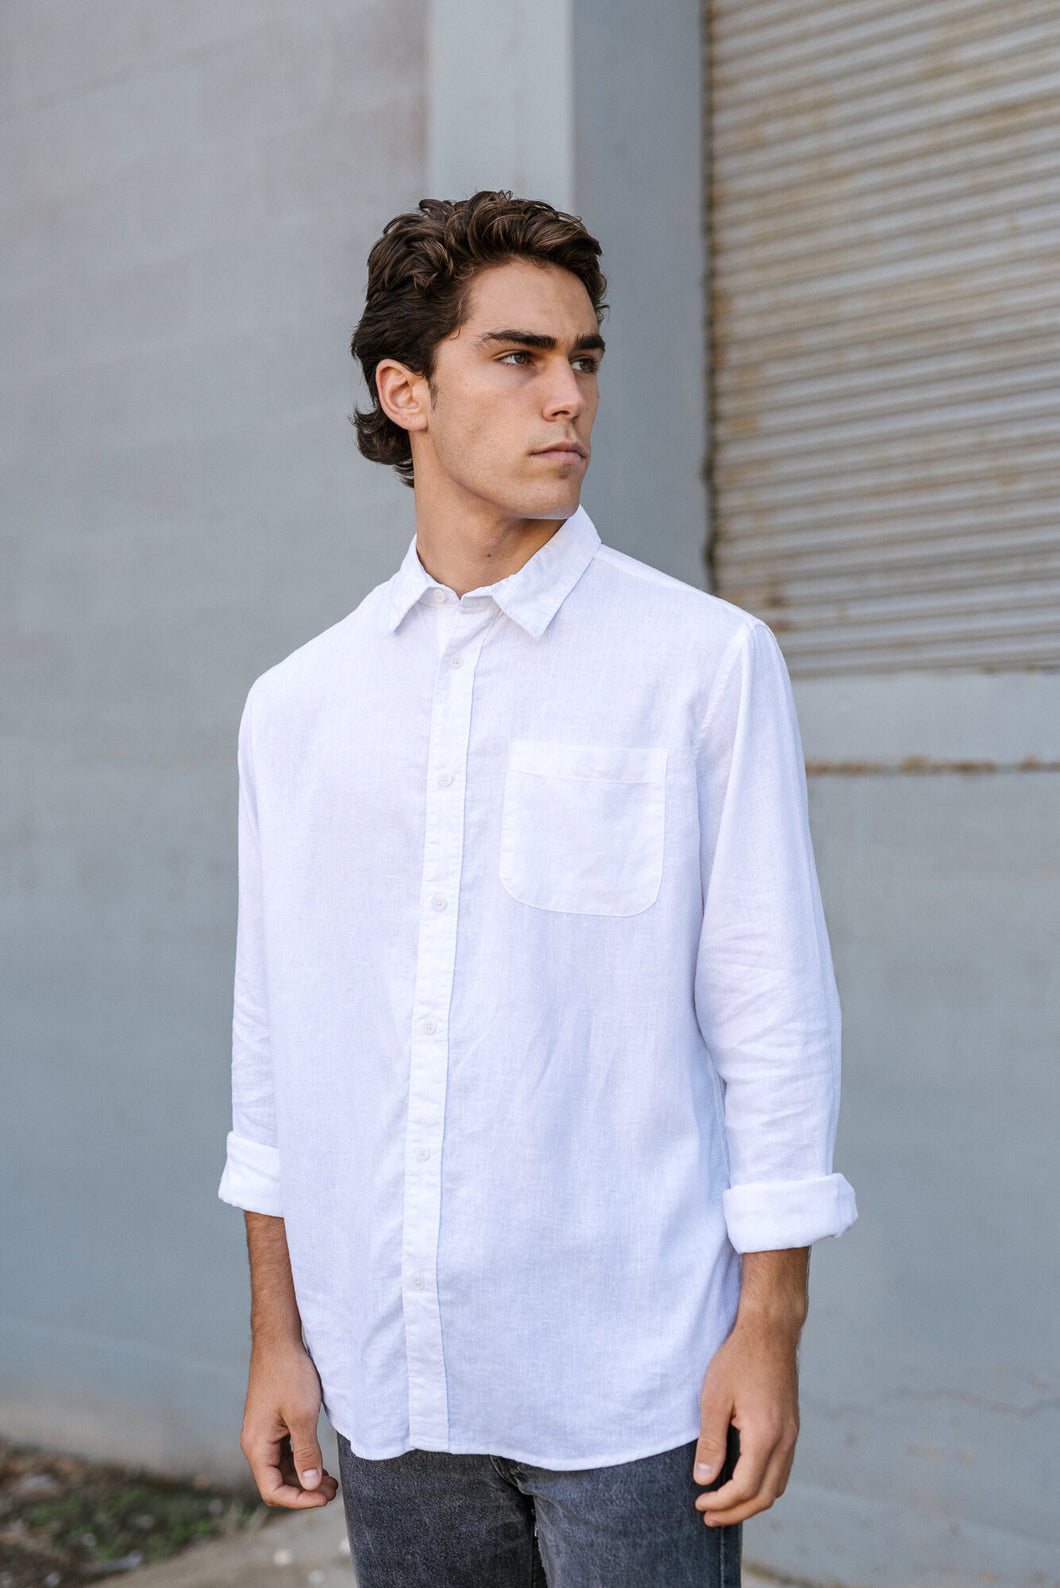 Hemp Clothing Australia Newtown L/S Shirt White